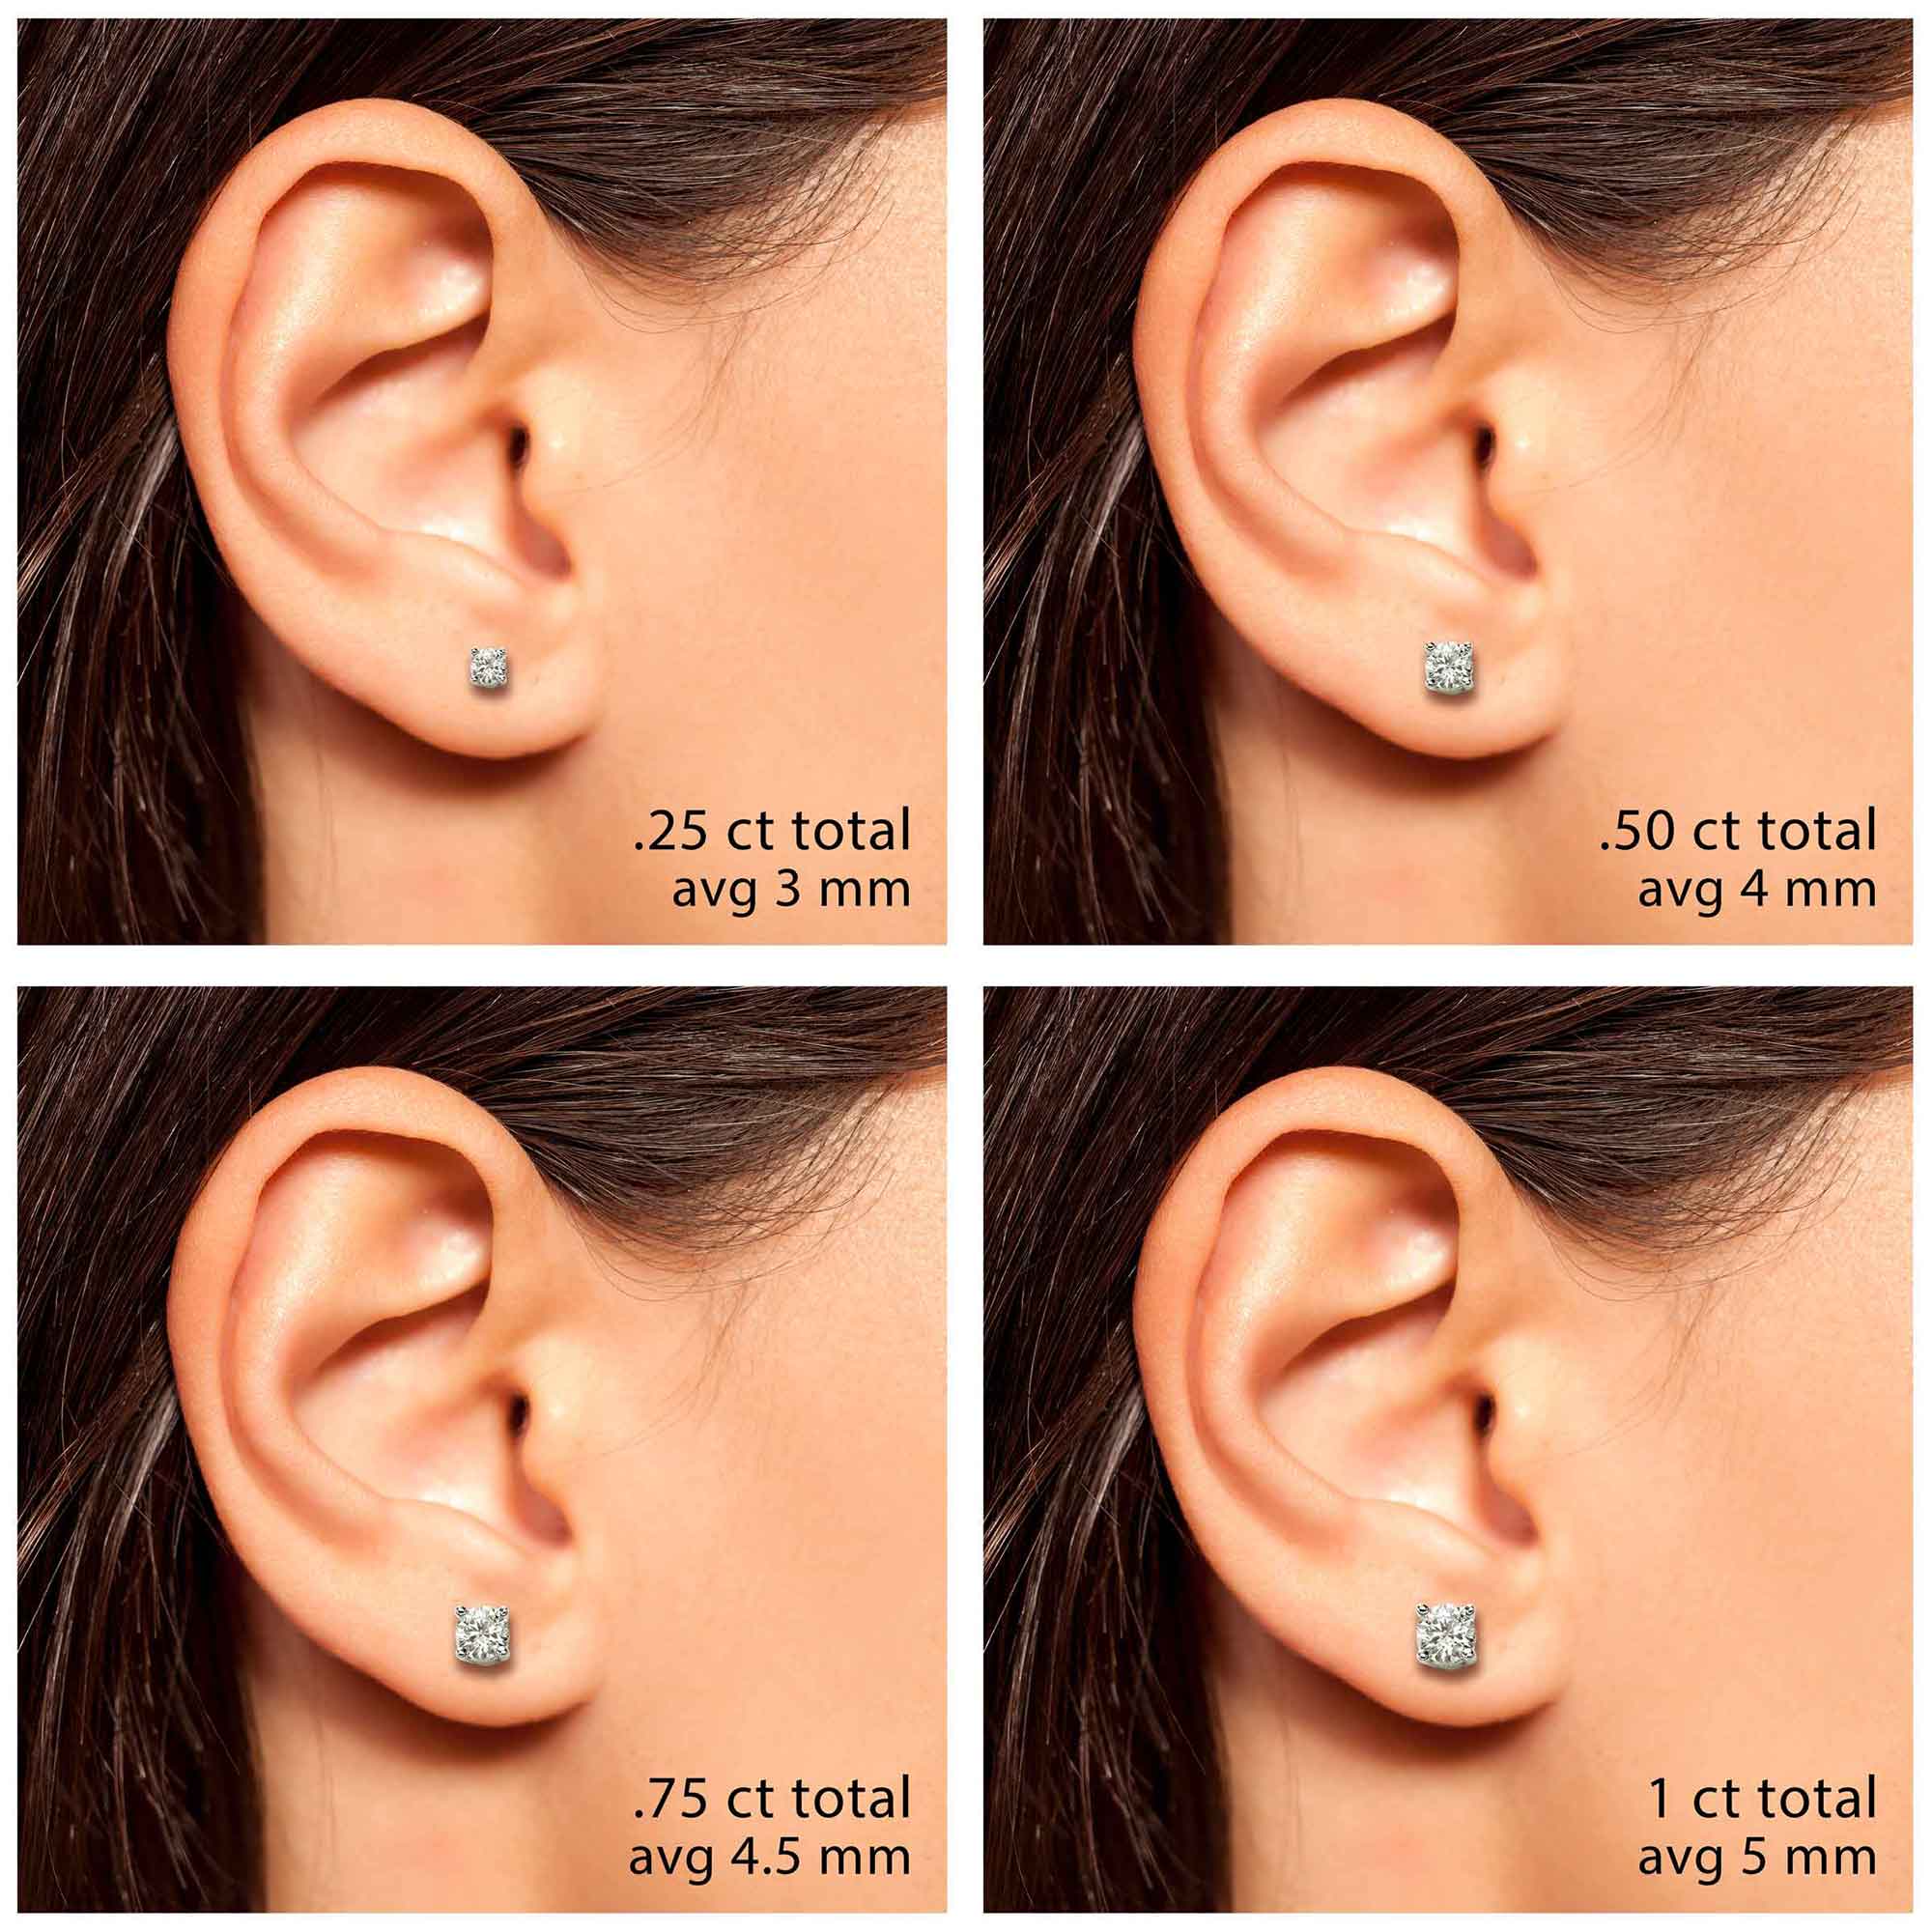 3 Stone Moissanite Diamond Earrings, Diamond Studs - Shraddha Shree Gems